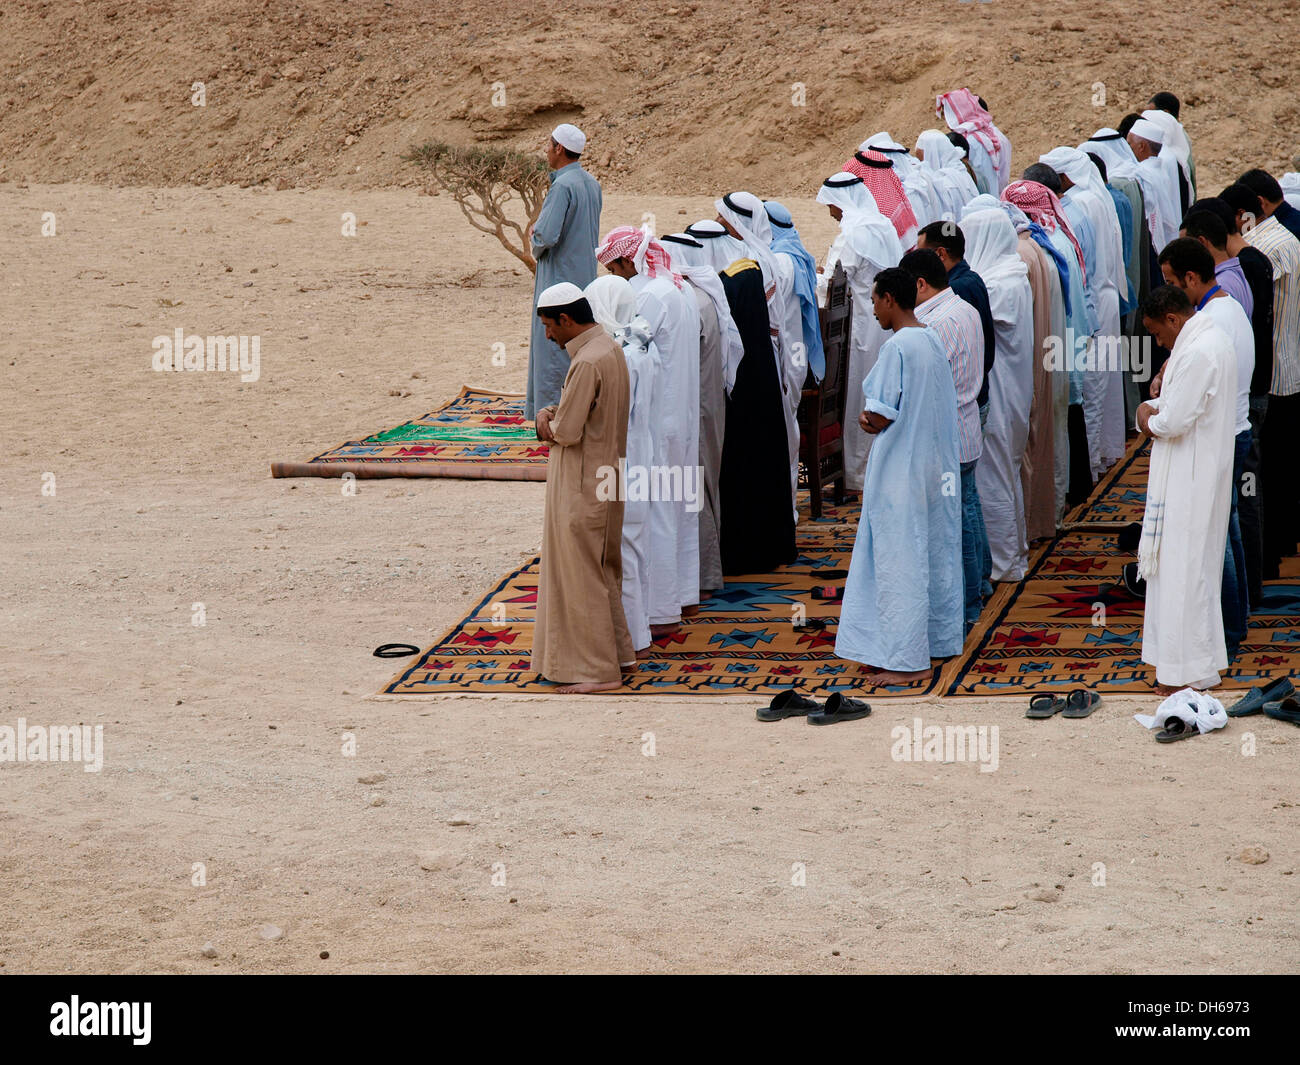 Allah akbar - Allah is great, Bedouins facing toward Mecca in prayer, desert peoples from Egypt meeting in Wadi el Gamal Stock Photo